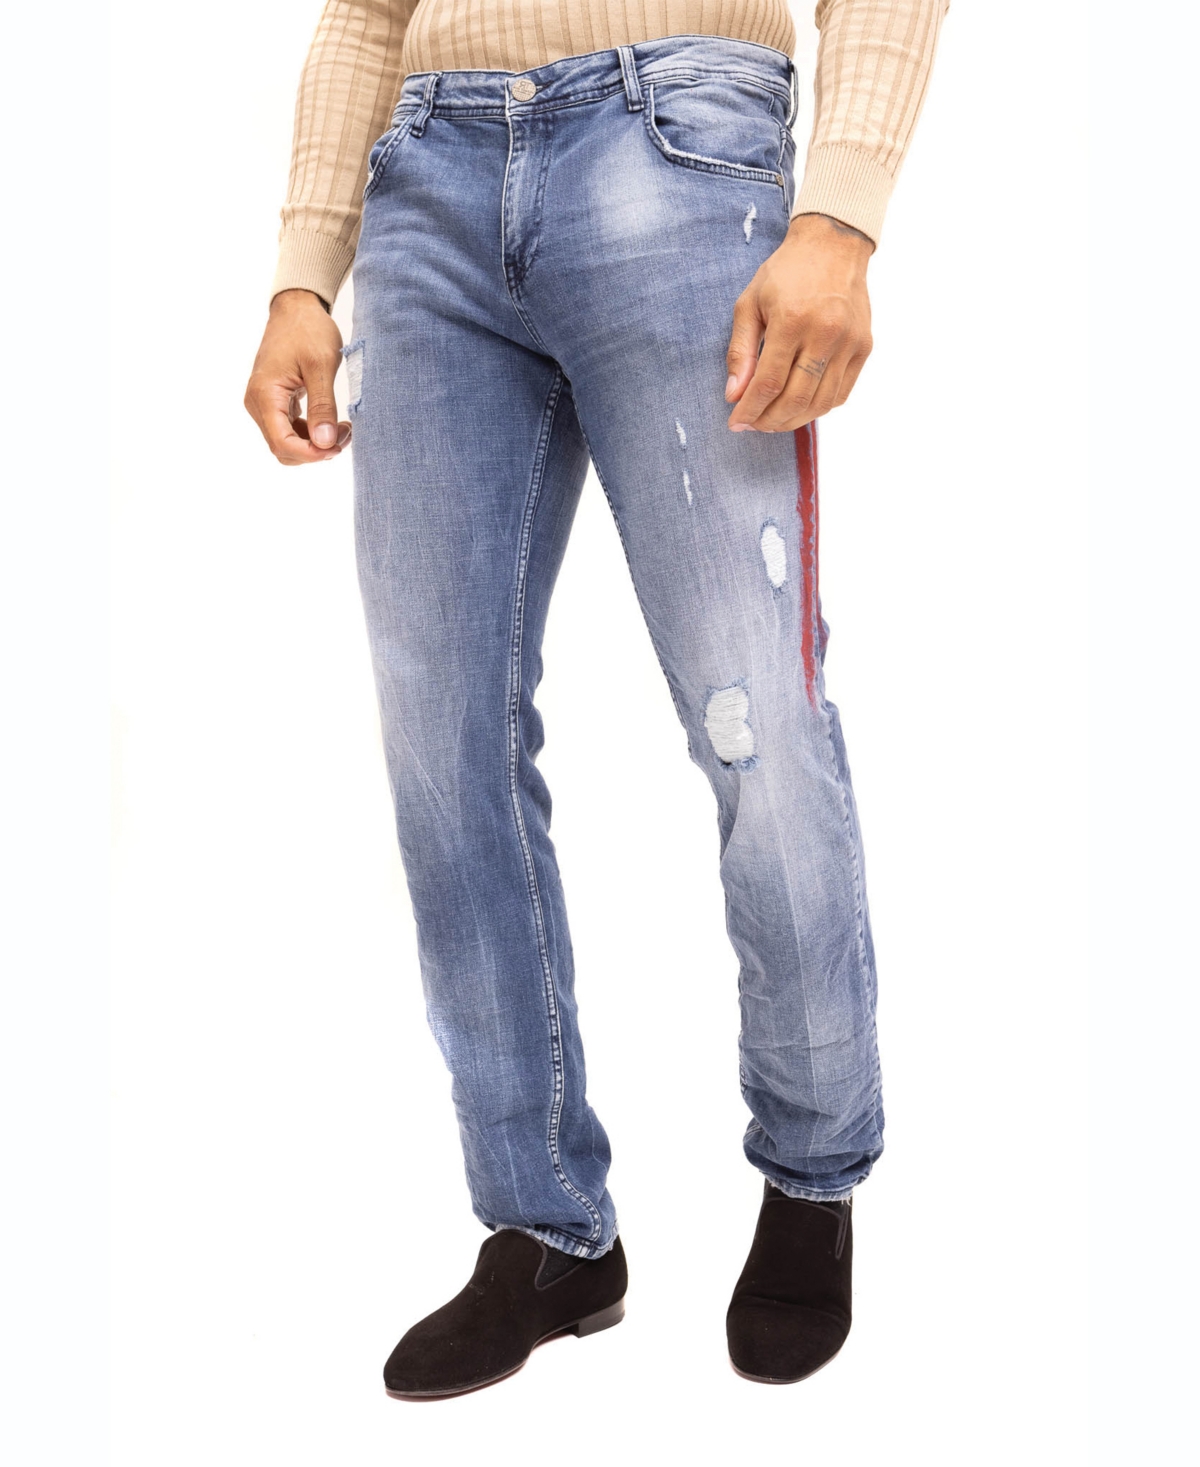 Men's Modern Stripe Denim Jeans - Indigo